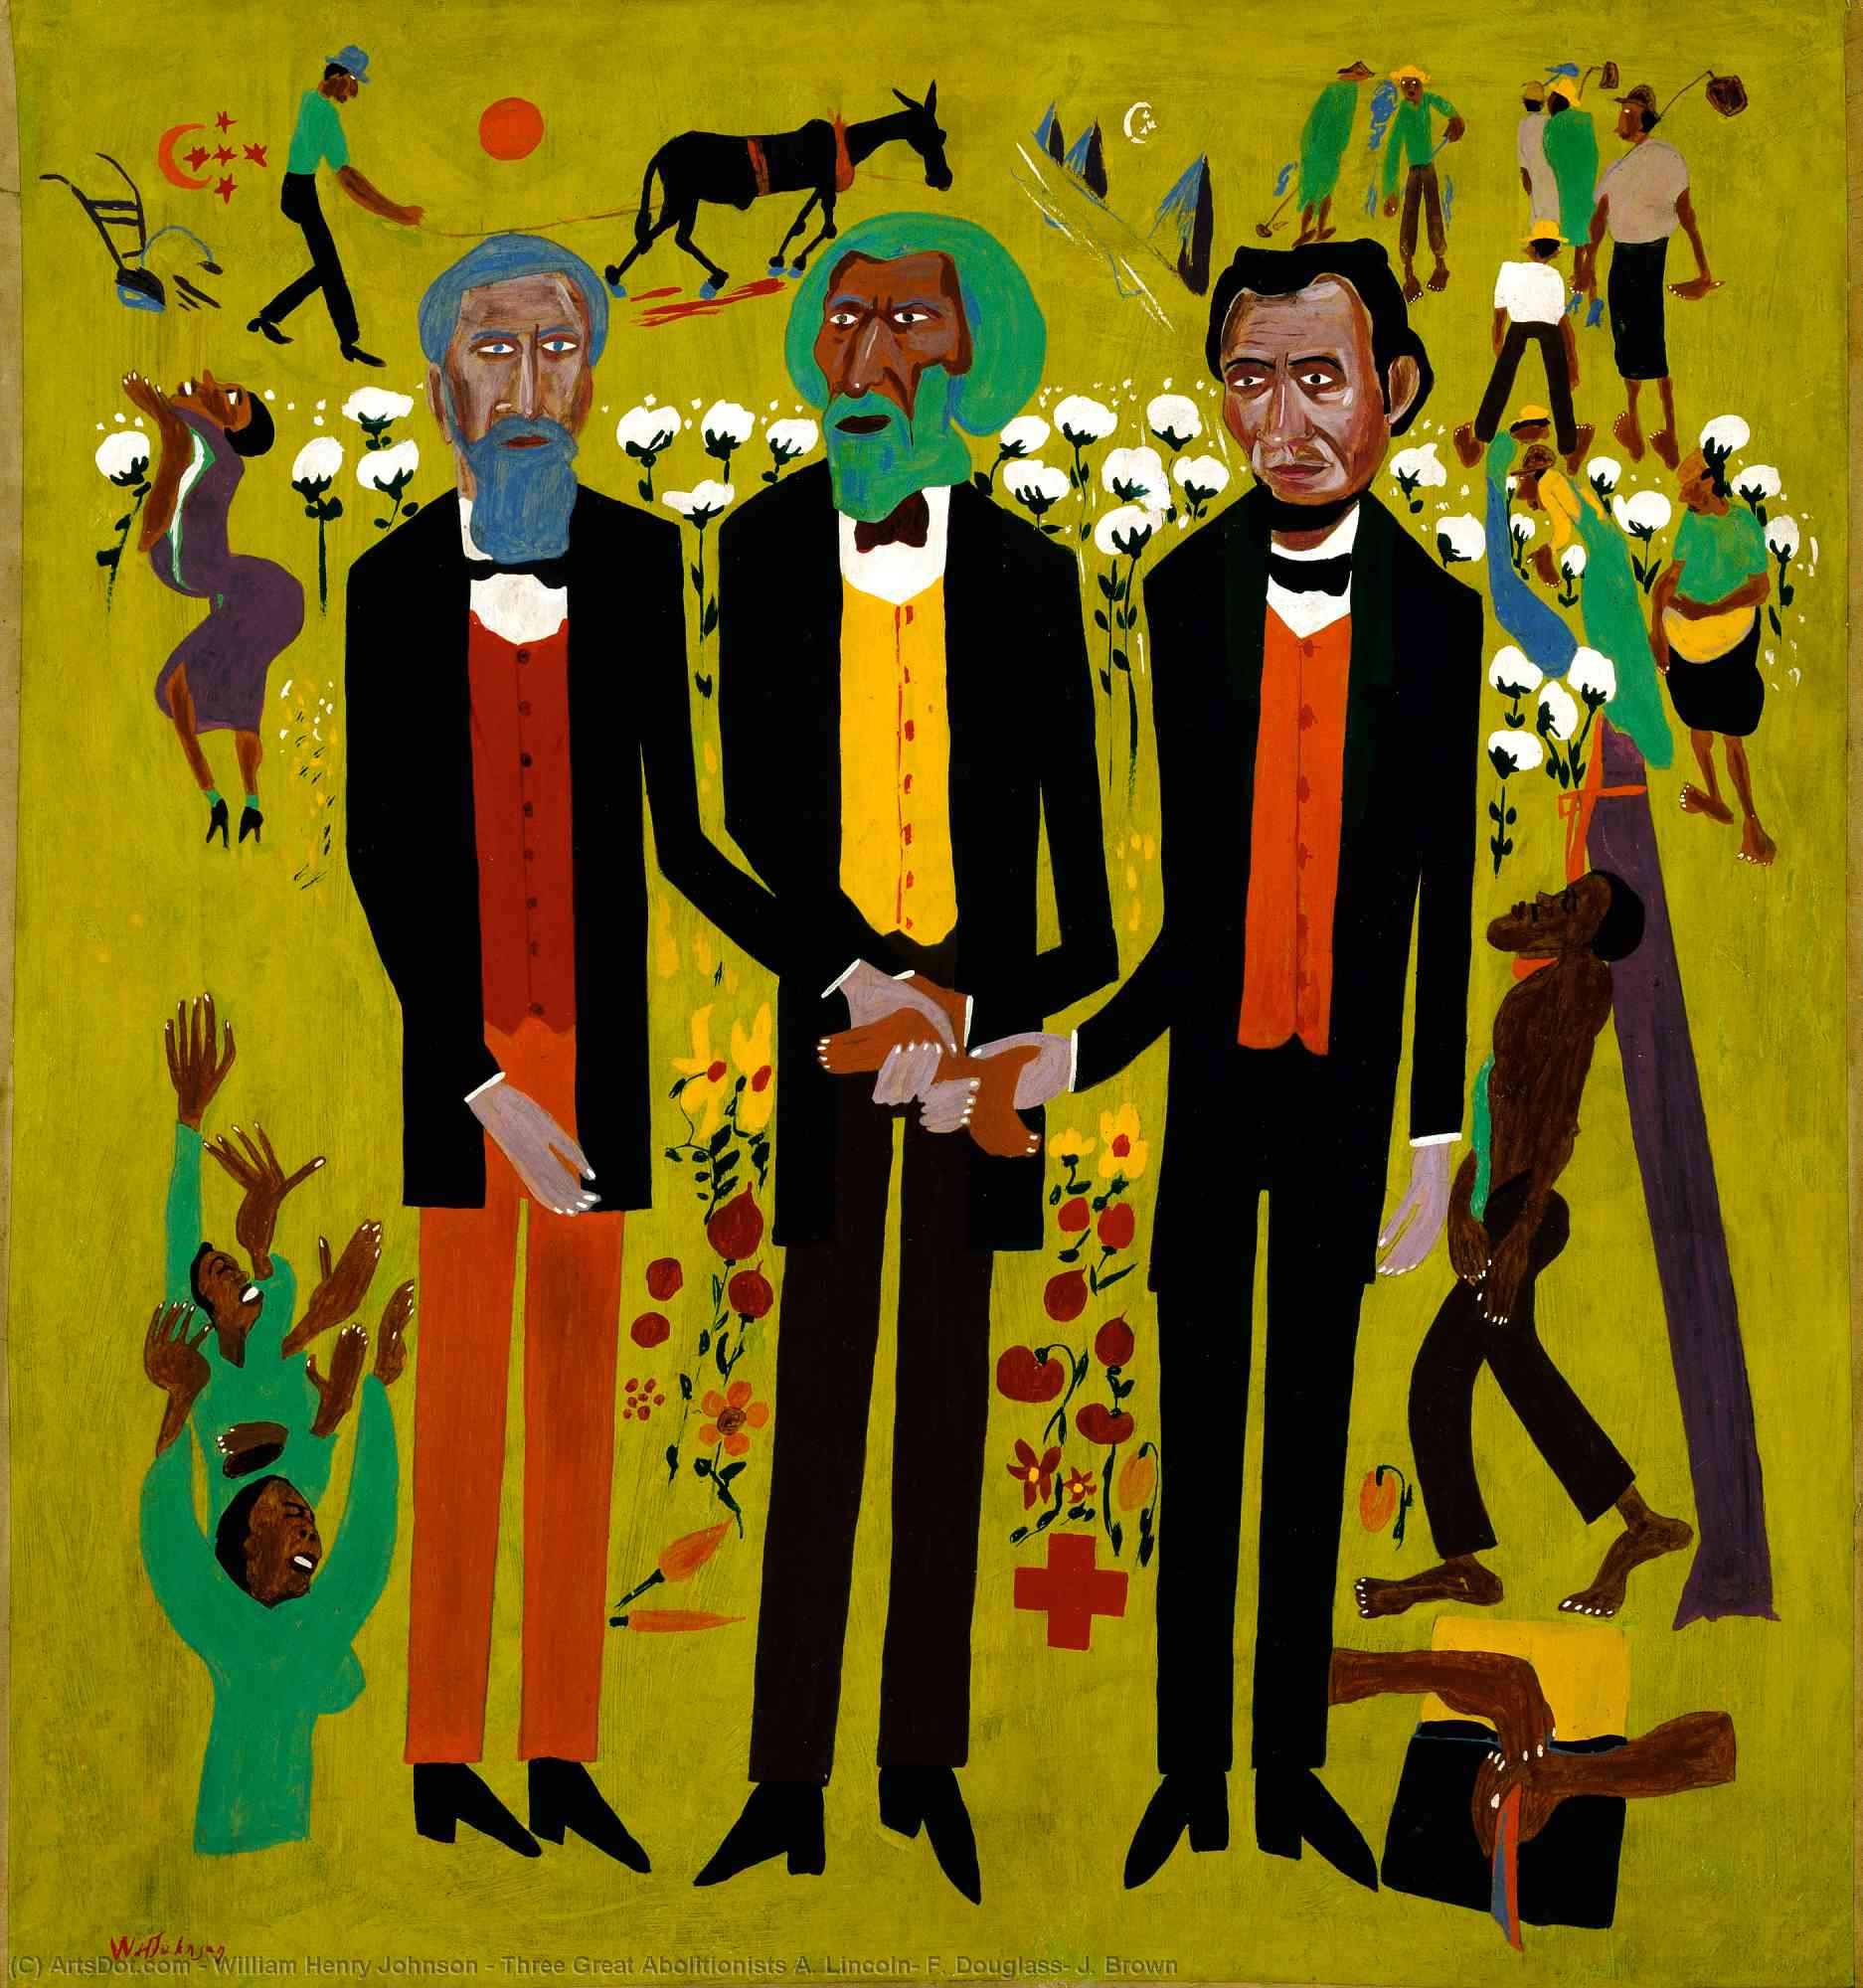 Wikoo.org - موسوعة الفنون الجميلة - اللوحة، العمل الفني William Henry Johnson - Three Great Abolitionists A. Lincoln, F. Douglass, J. Brown